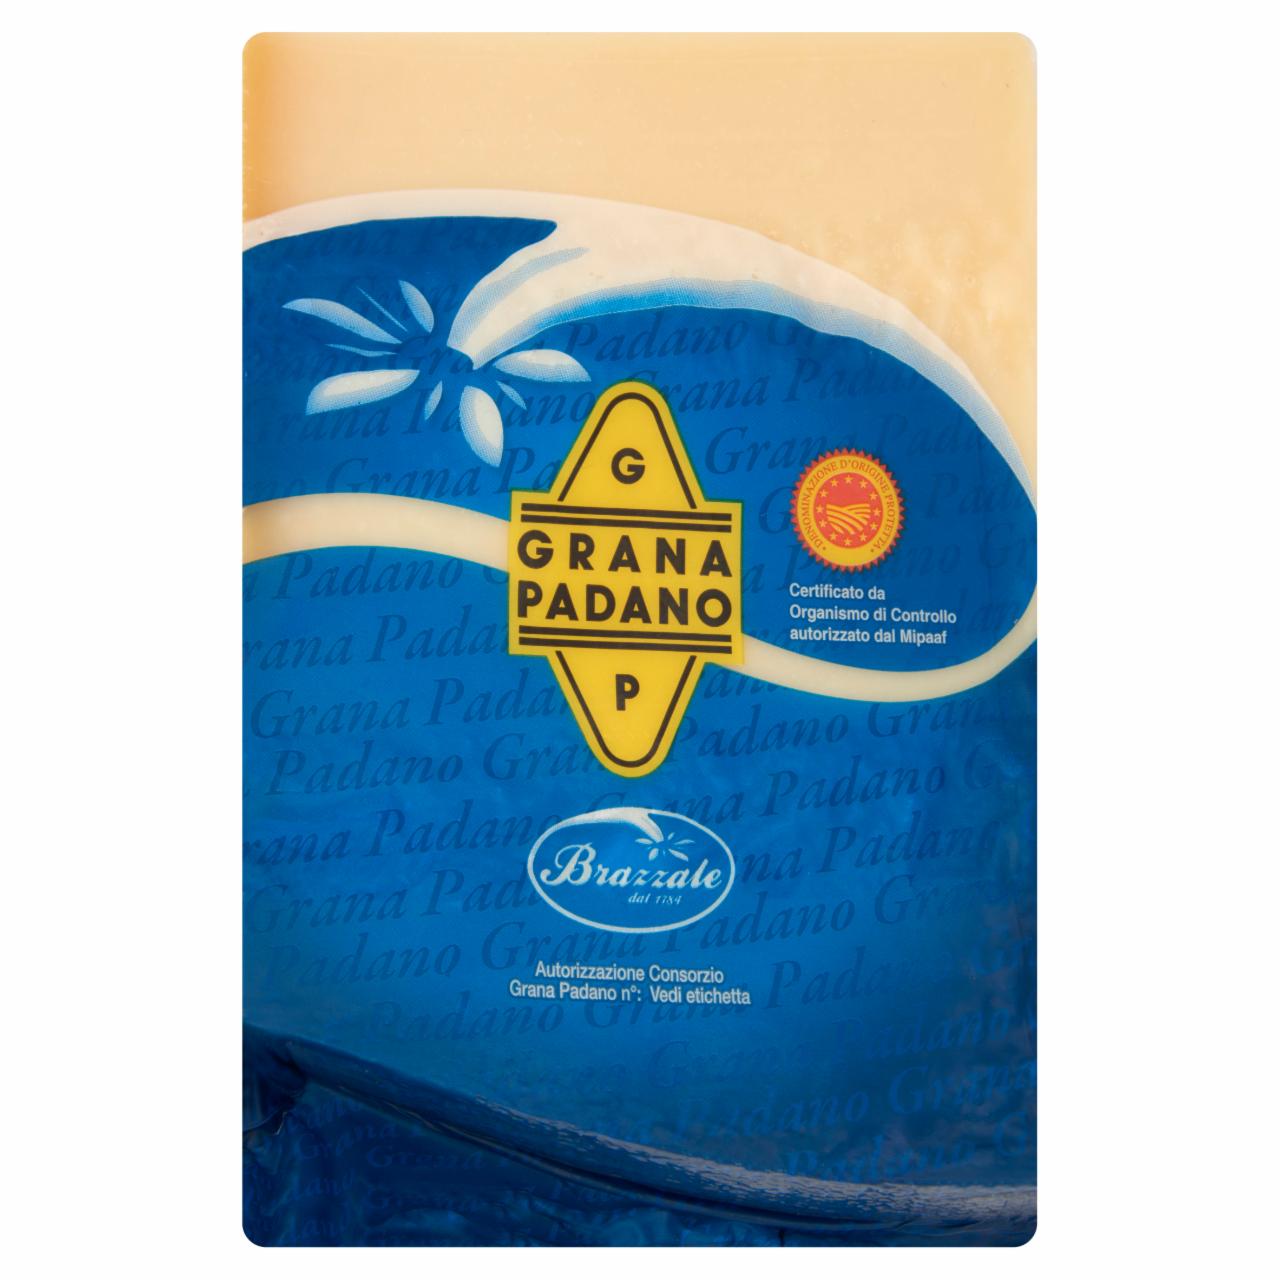 Képek - Brazzale Grana Padano félzsíros, kemény sajt